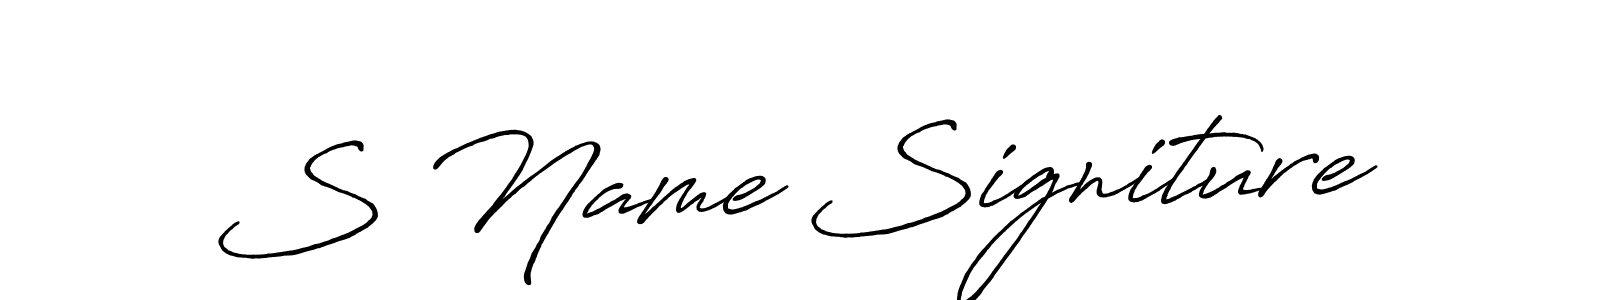 85+ S Name Signiture Name Signature Style Ideas | Good Electronic ...